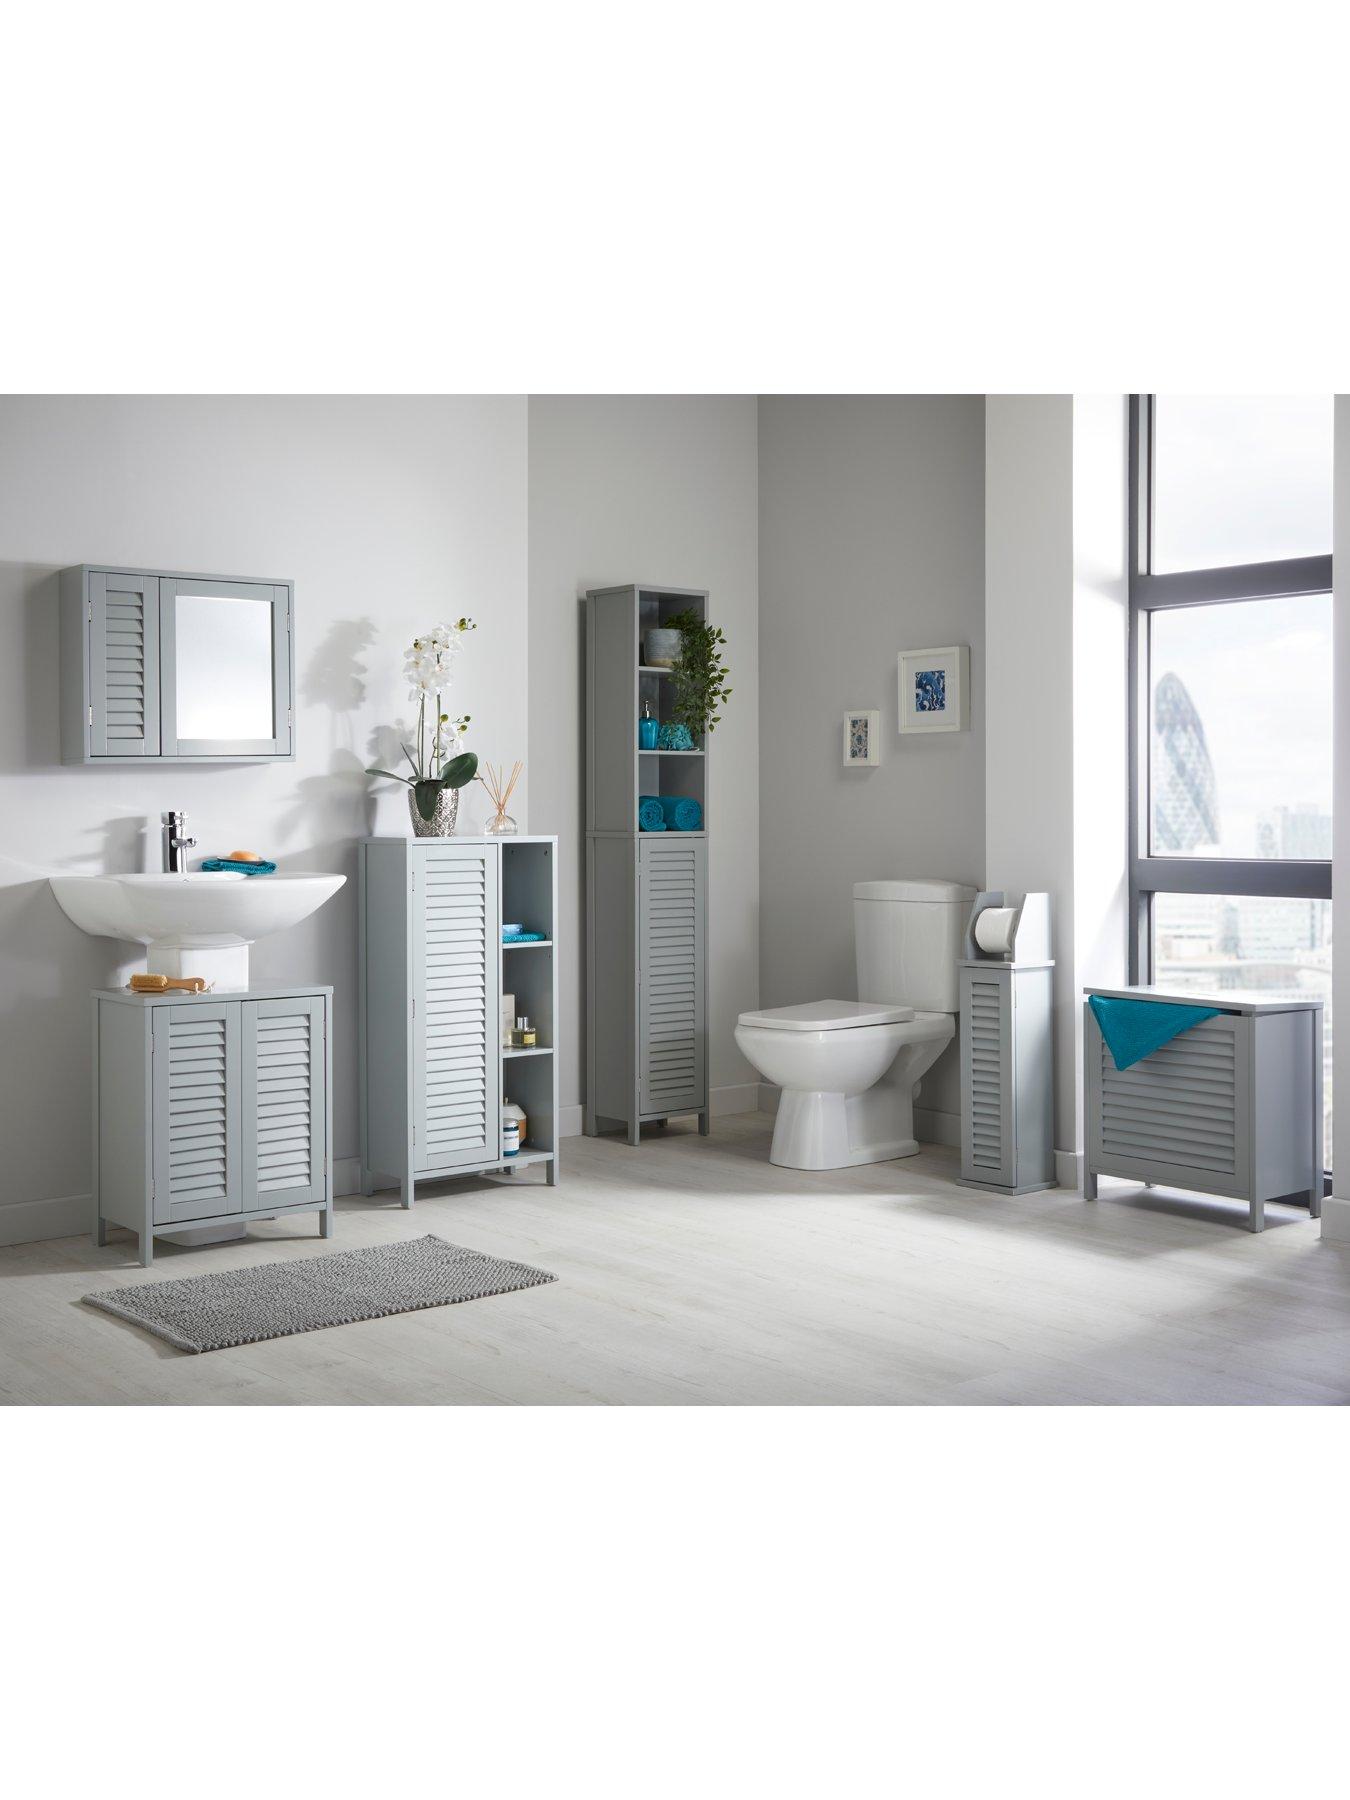 Lloyd Pascal Atlanta Mirrored Bathroom Wall Cabinet With Push Opening Doors Grey Very Co Uk